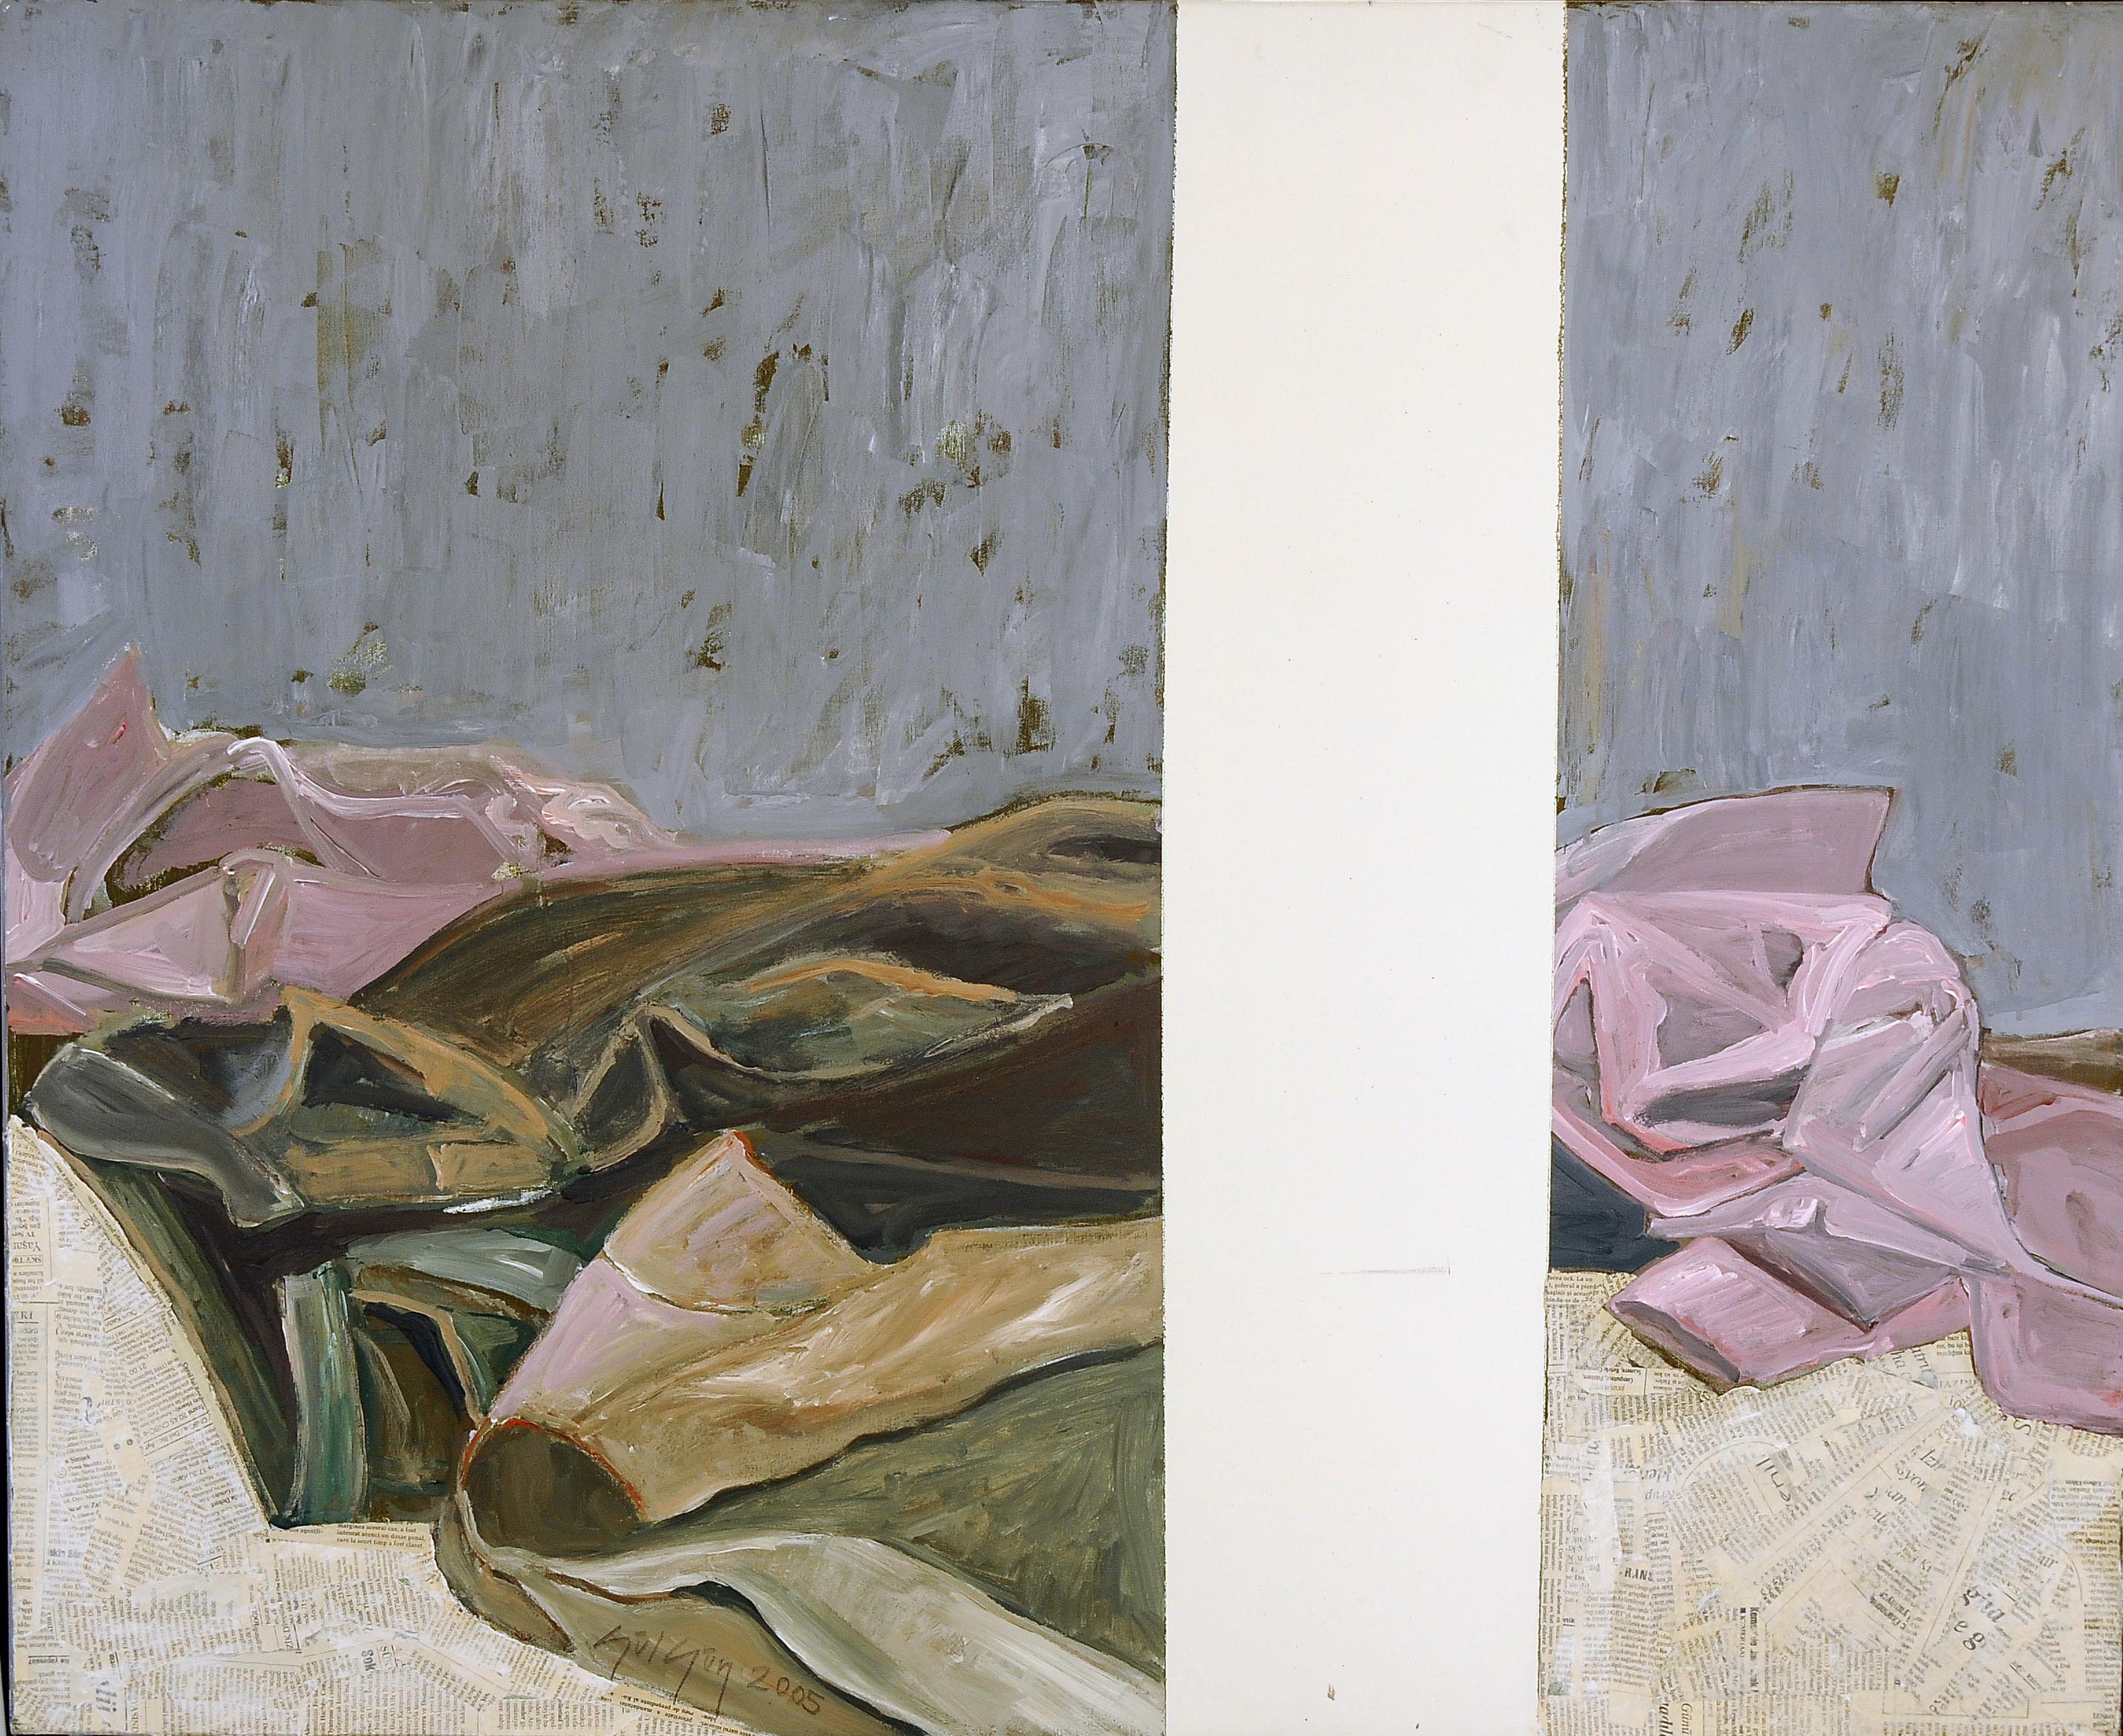 İsimsiz- Untitled, 2005, Tuval üzerine karışık teknik- Mixed media on canvas, 90x110 cm